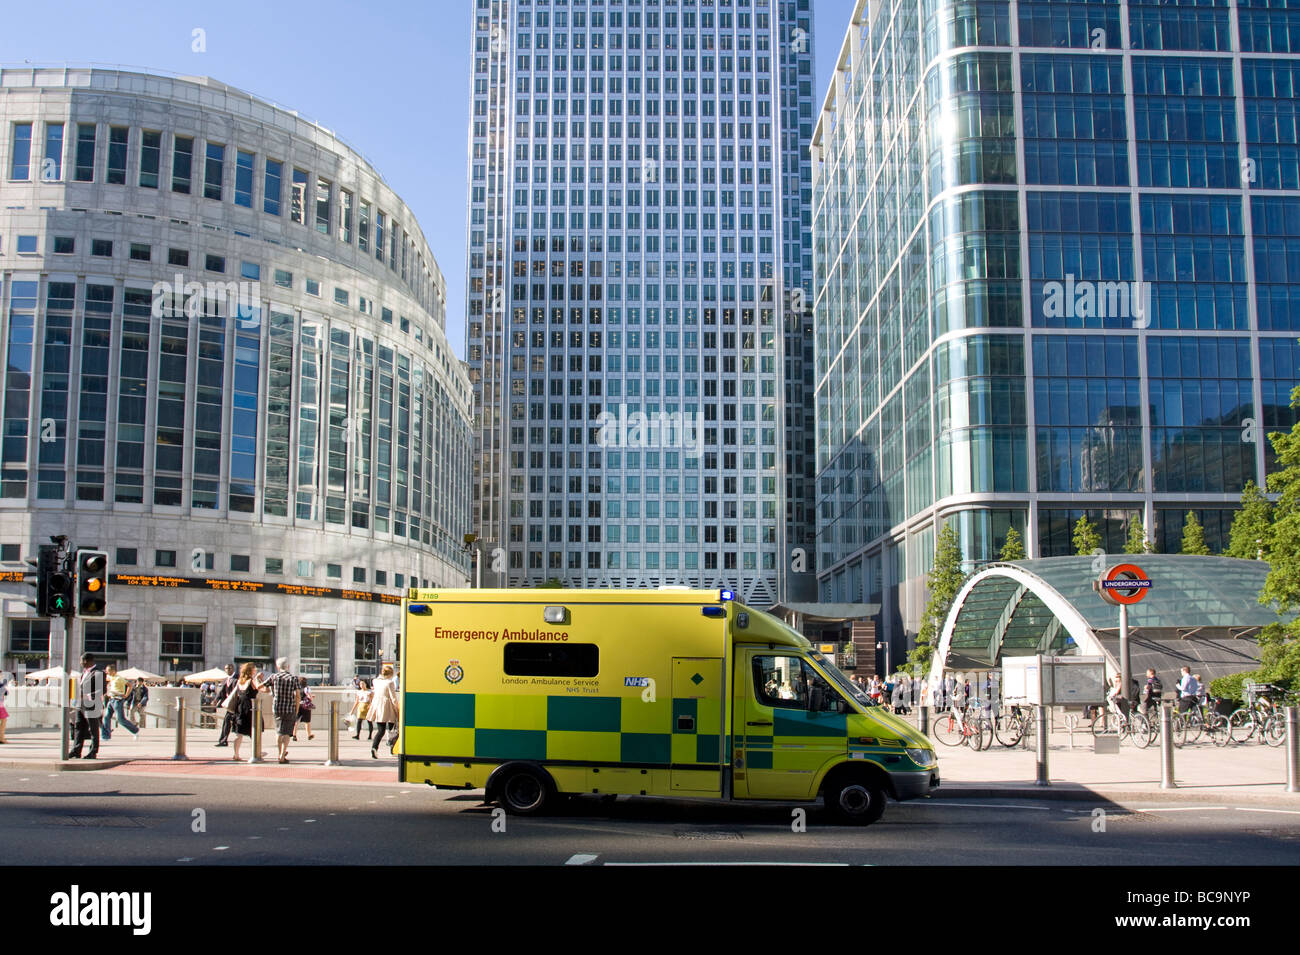 NHS London Emergency Ambulance - Canary Wharf - London Stock Photo